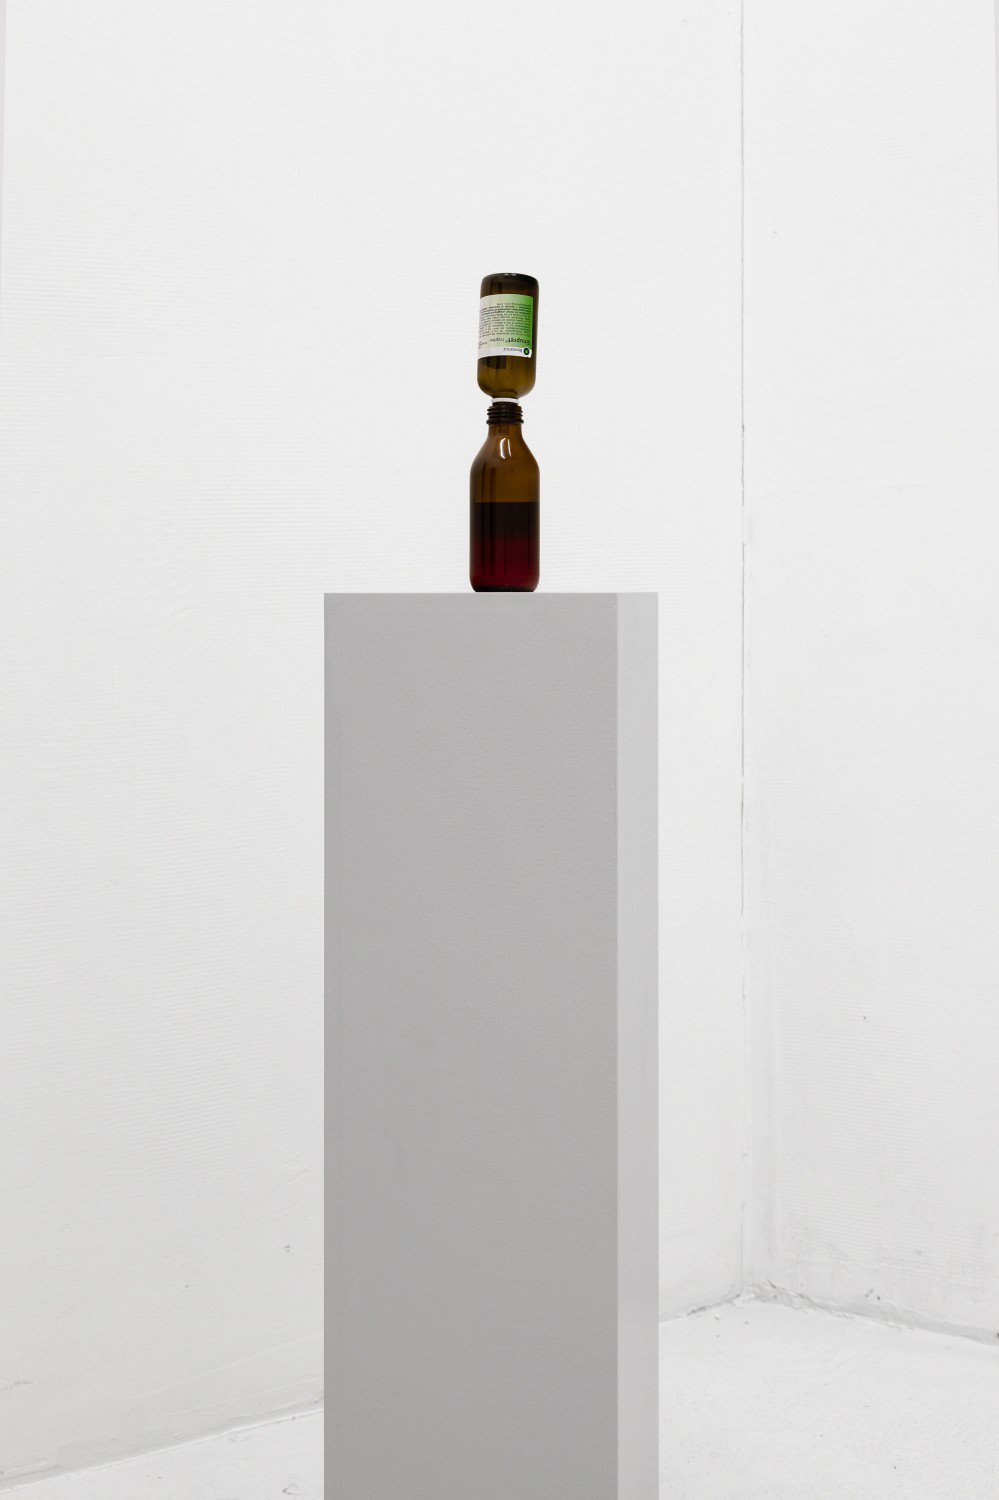 Benjamin Hirteo.T., 2013Wick cough sirup, sinupret drops, plinth25 x 165 cm